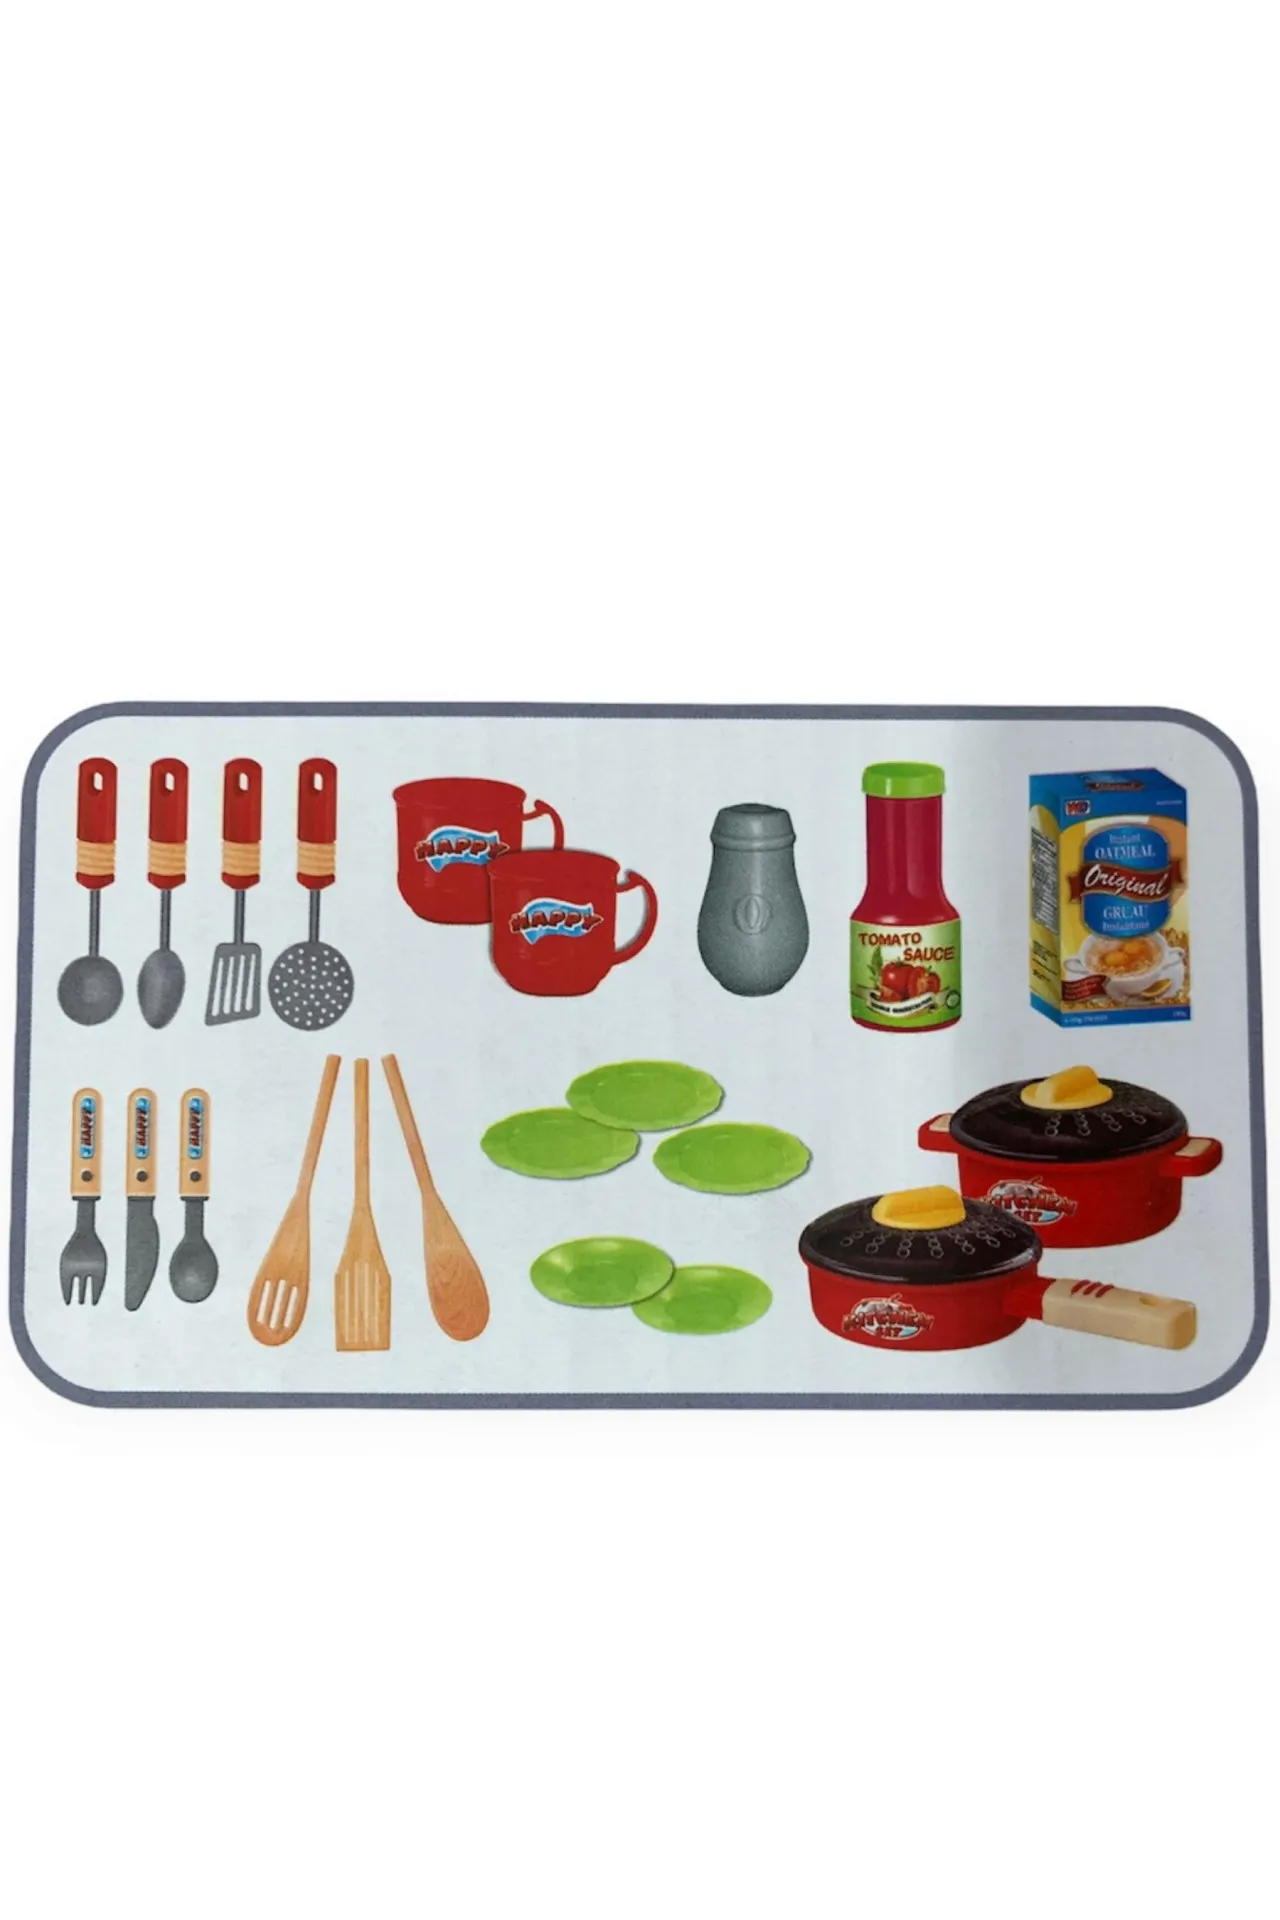 Детская кухня игровой набор kitchen little chef d027 shk toys#2